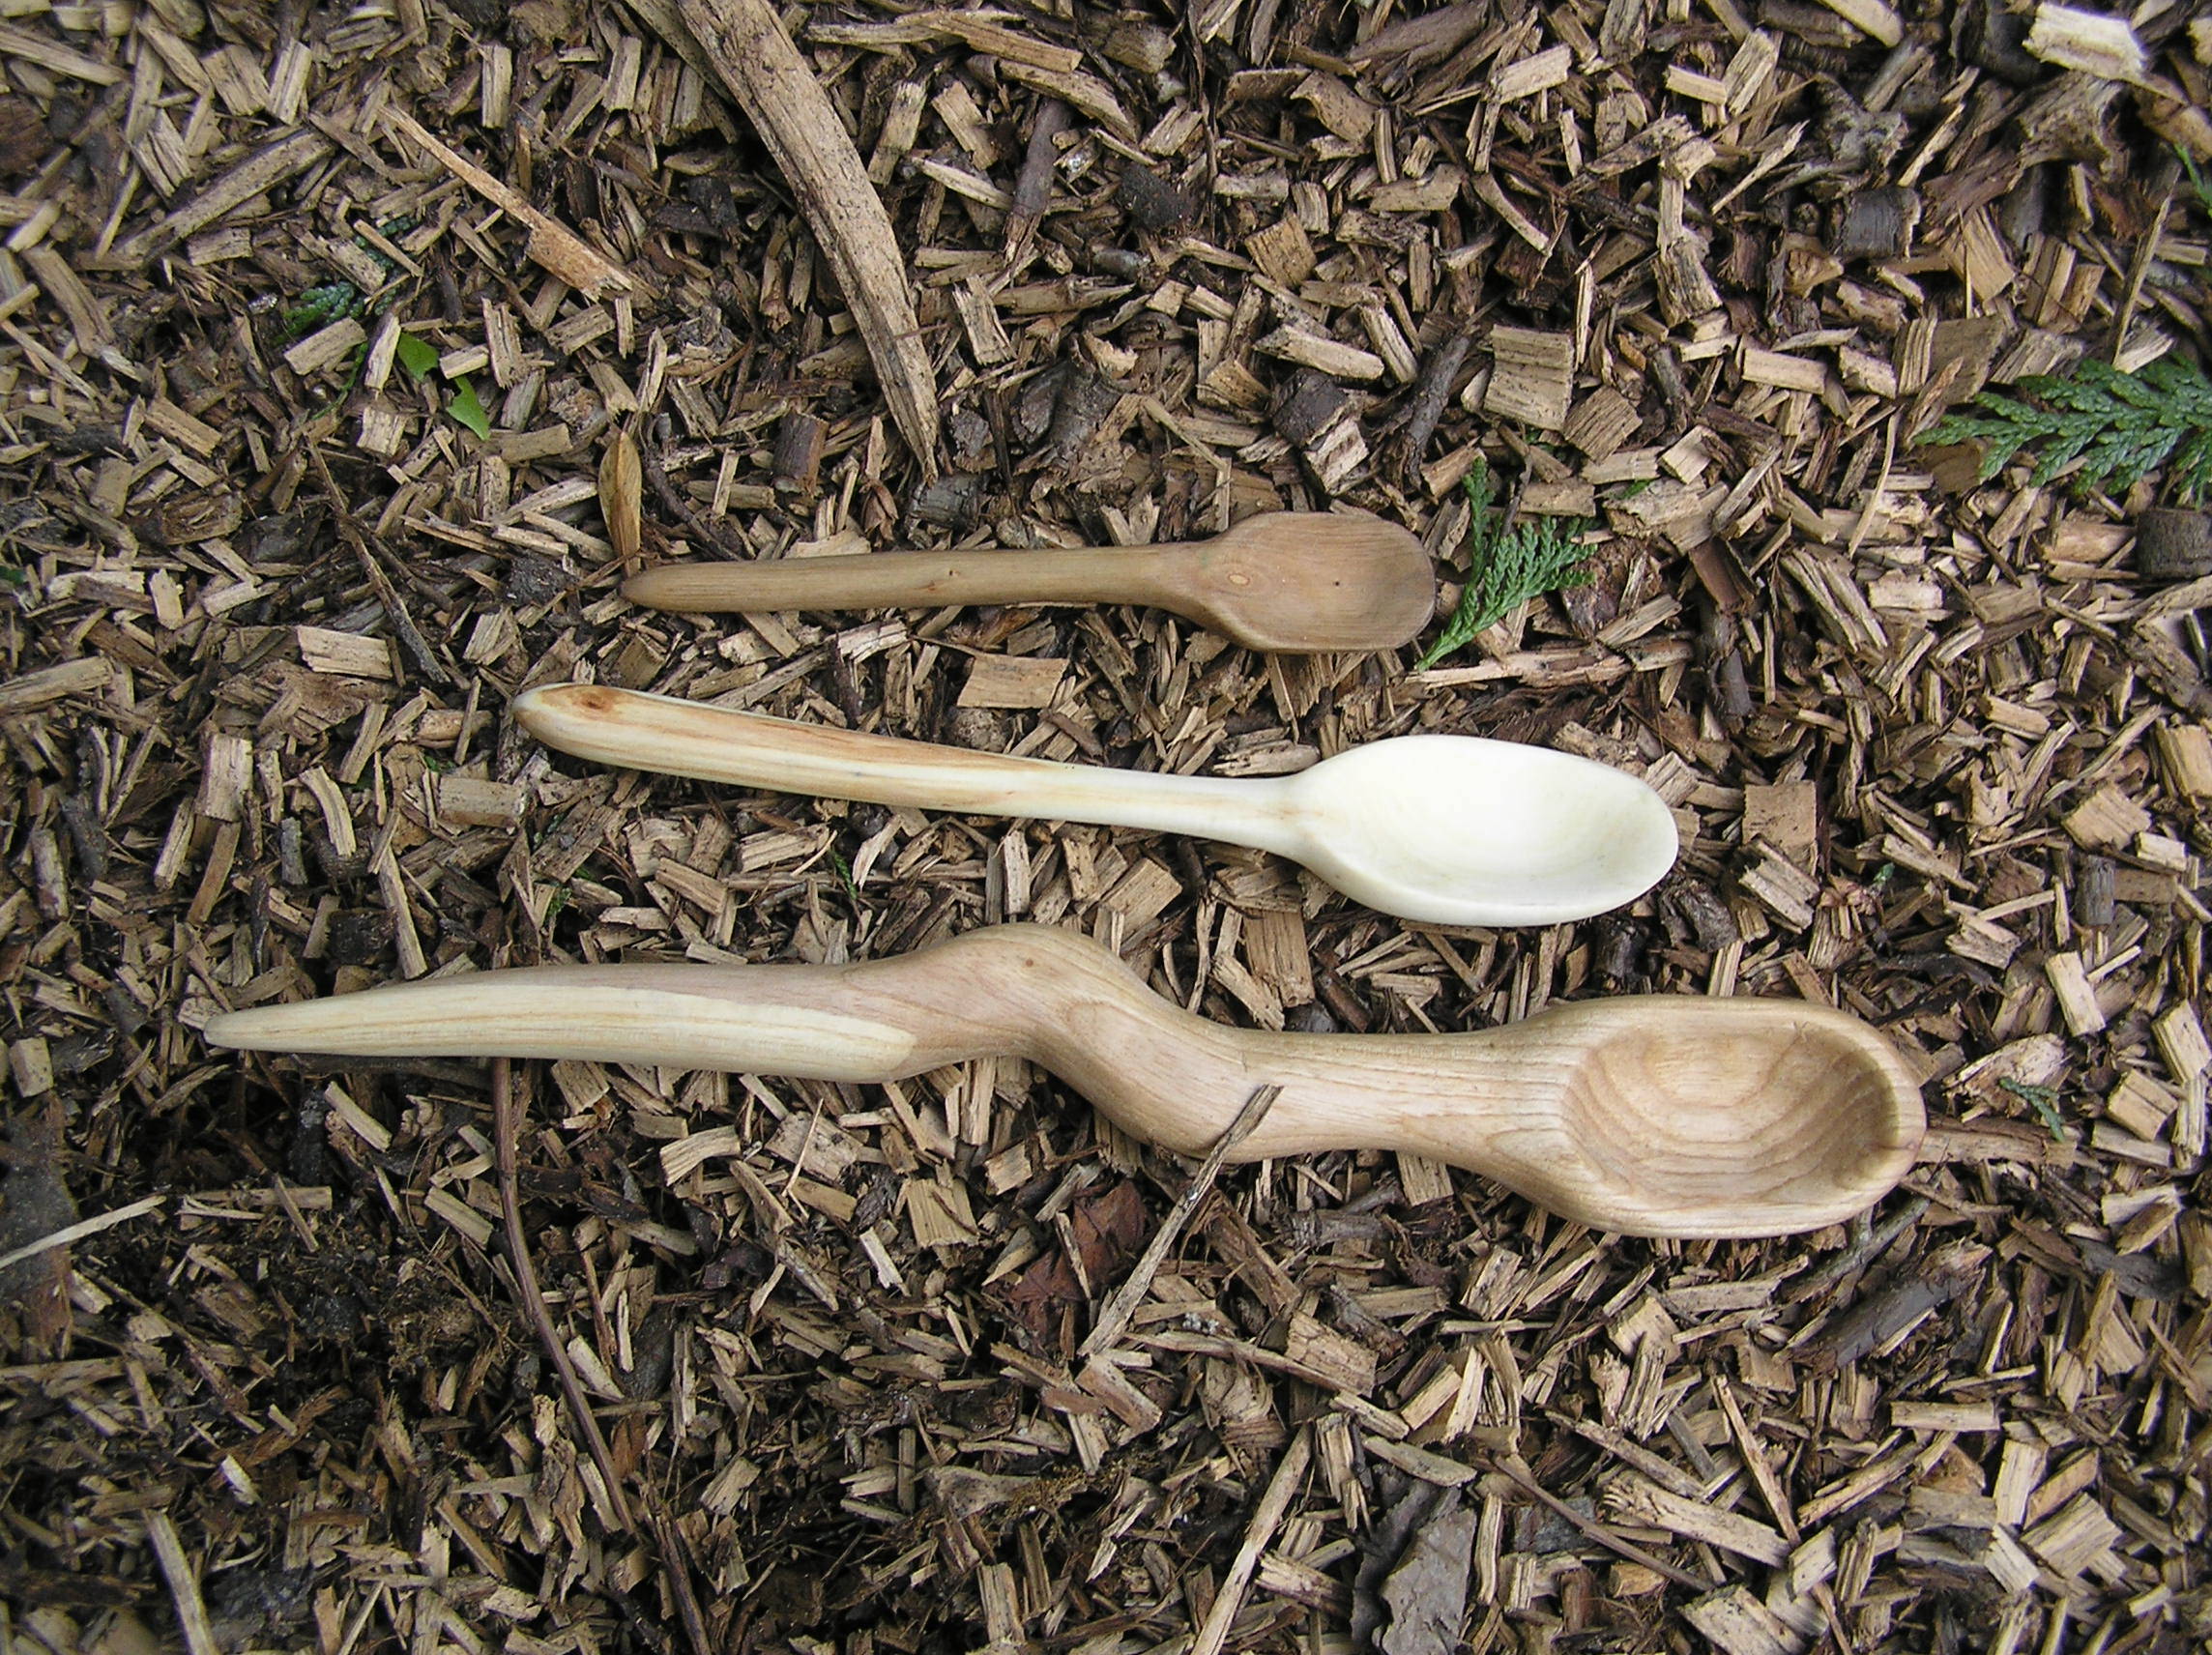 Spoons1